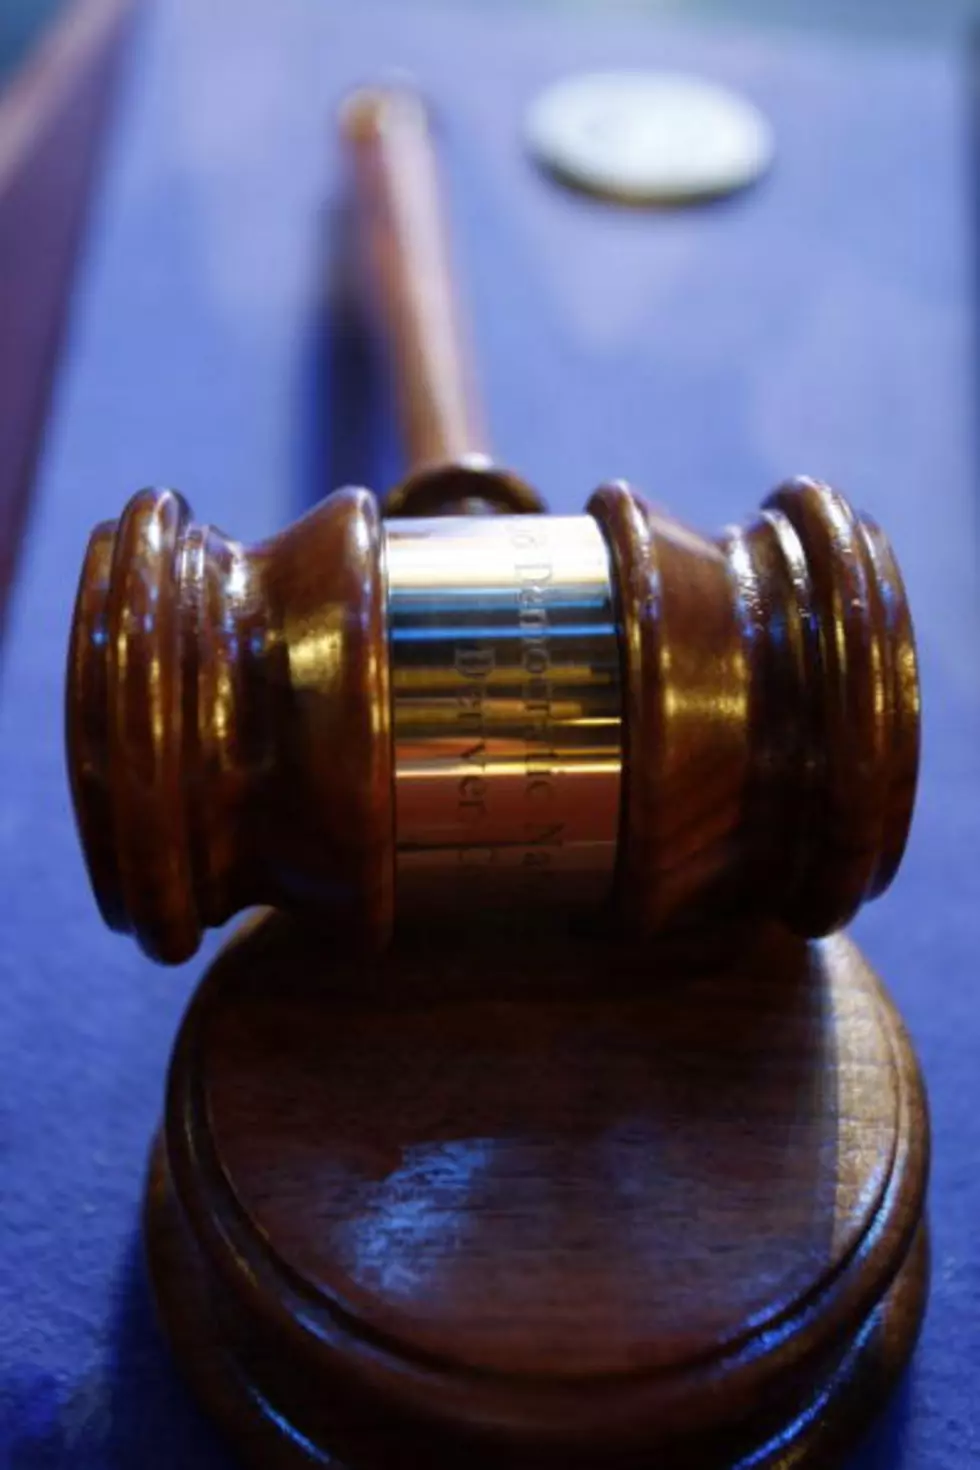 Man Sentenced For Sexual Internet Crimes Against A Lake Charles Teen